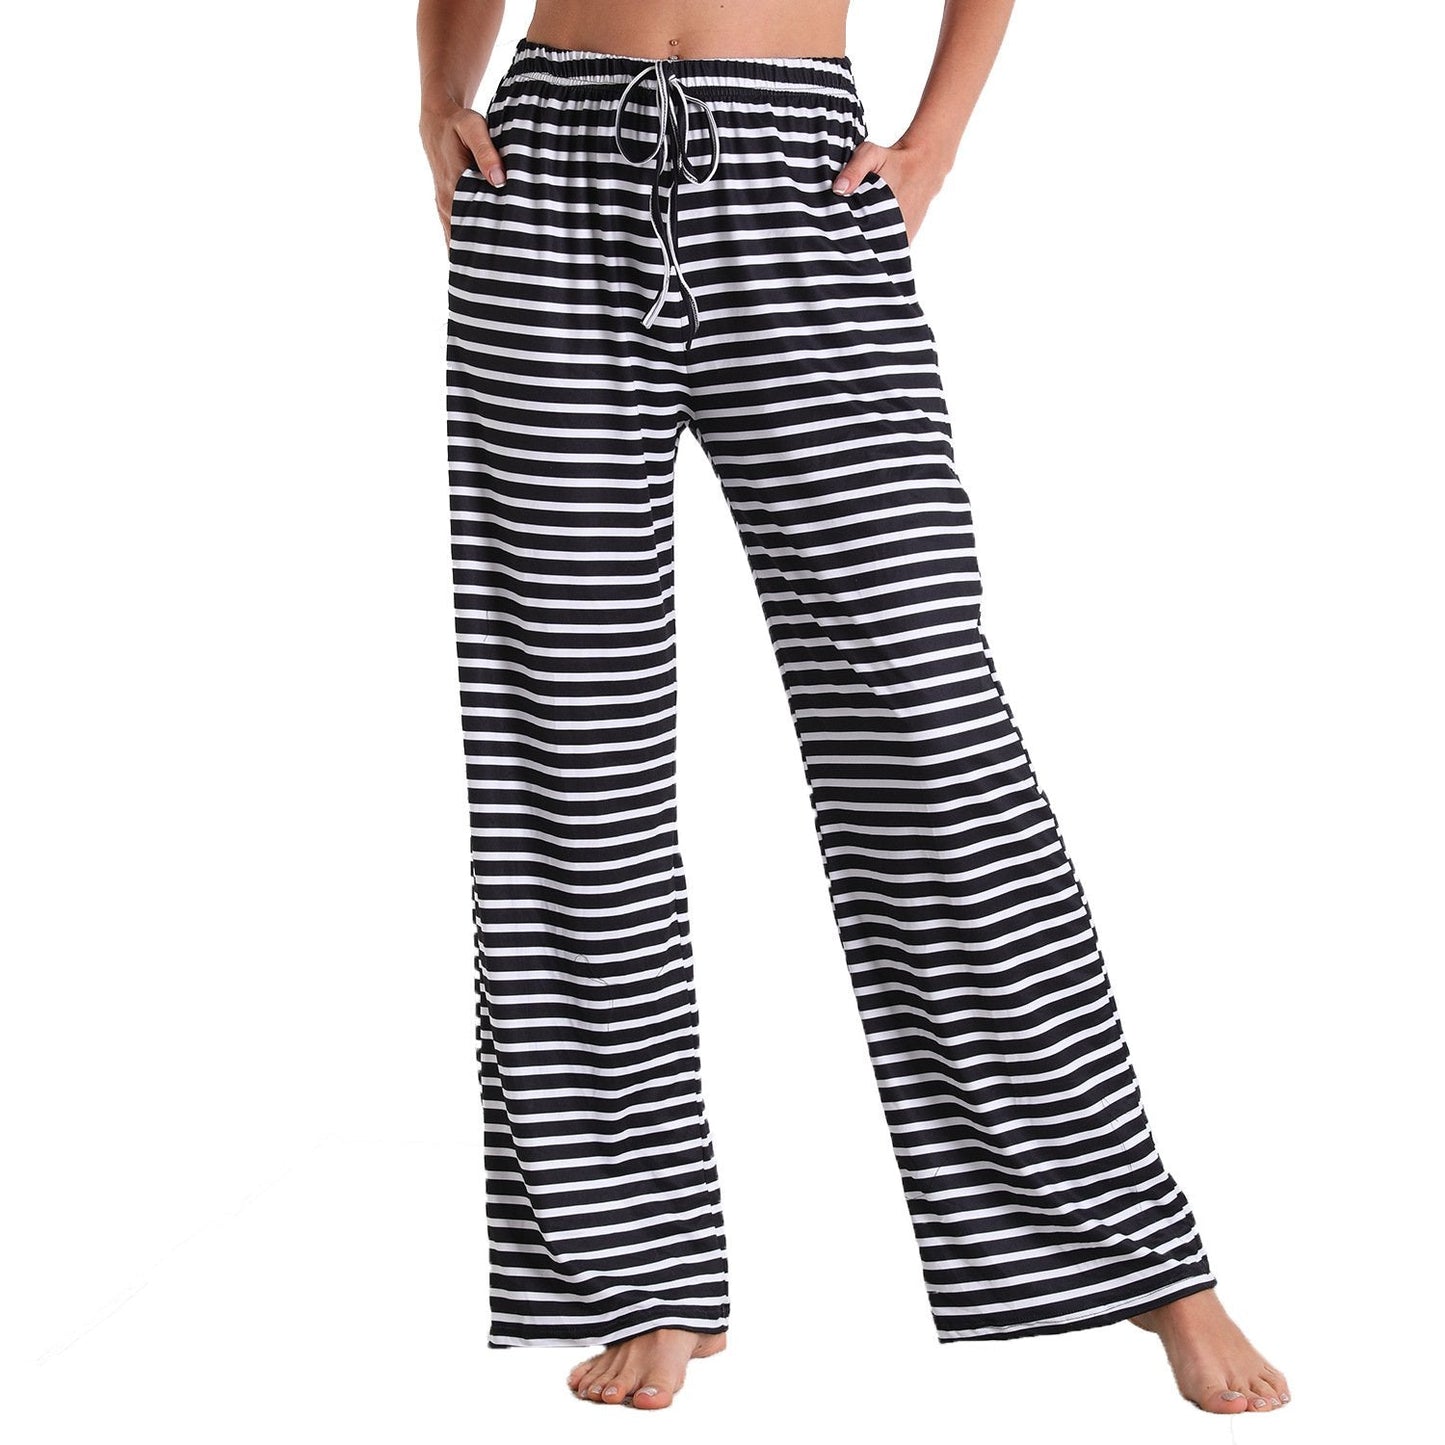 Leisure Women Comfortable Pants with Pocket-Pajamas-3017-S-Free Shipping Leatheretro